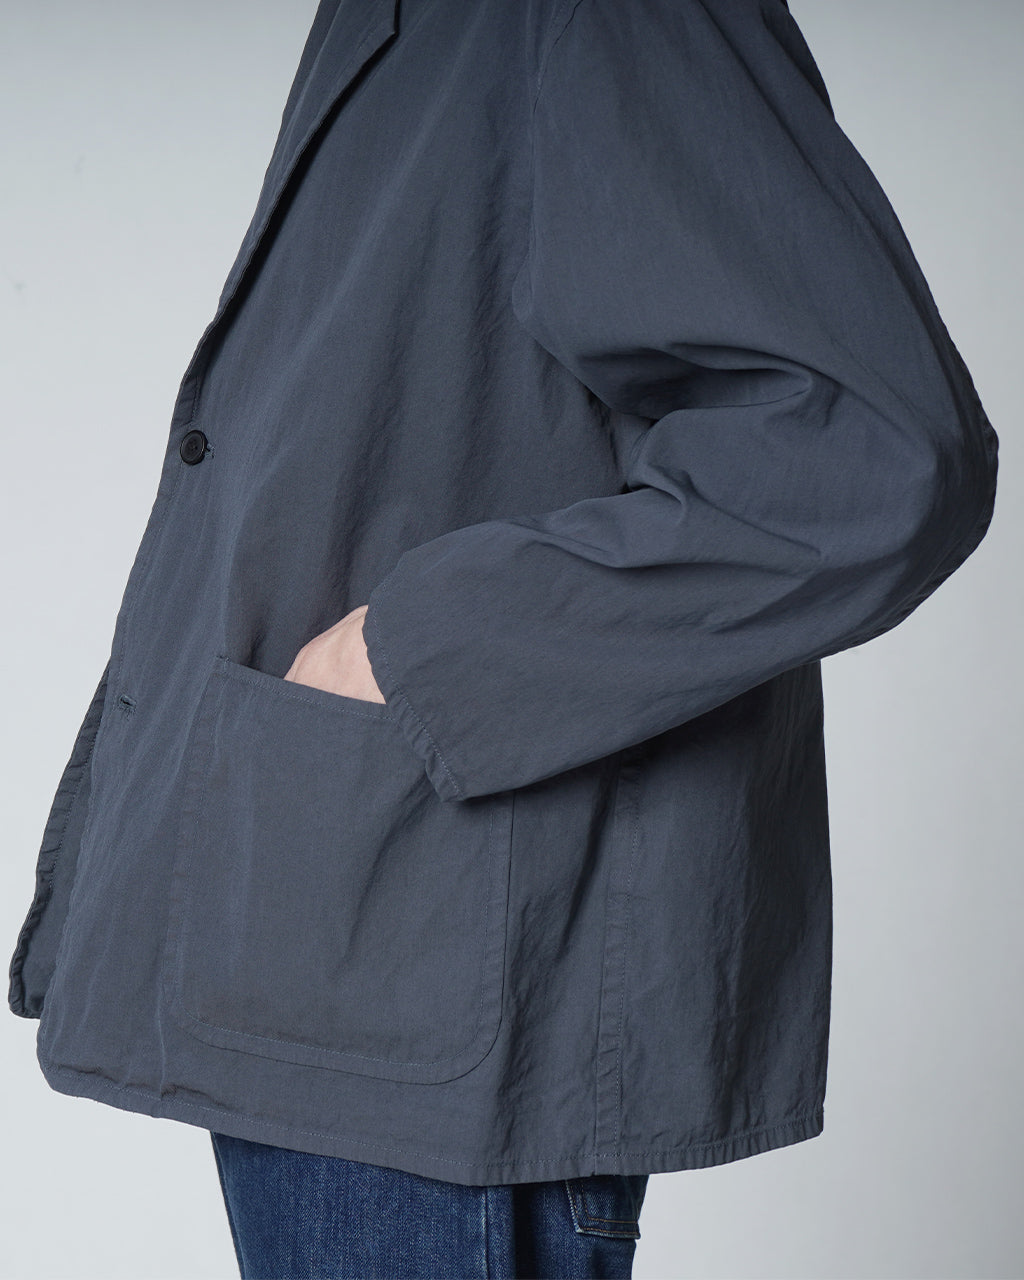 STILL BY HAND スティルバイハンド ガーメントダイ 2Bジャケット Garment-dye 2B jacket 羽織り  JK01241【送料無料】